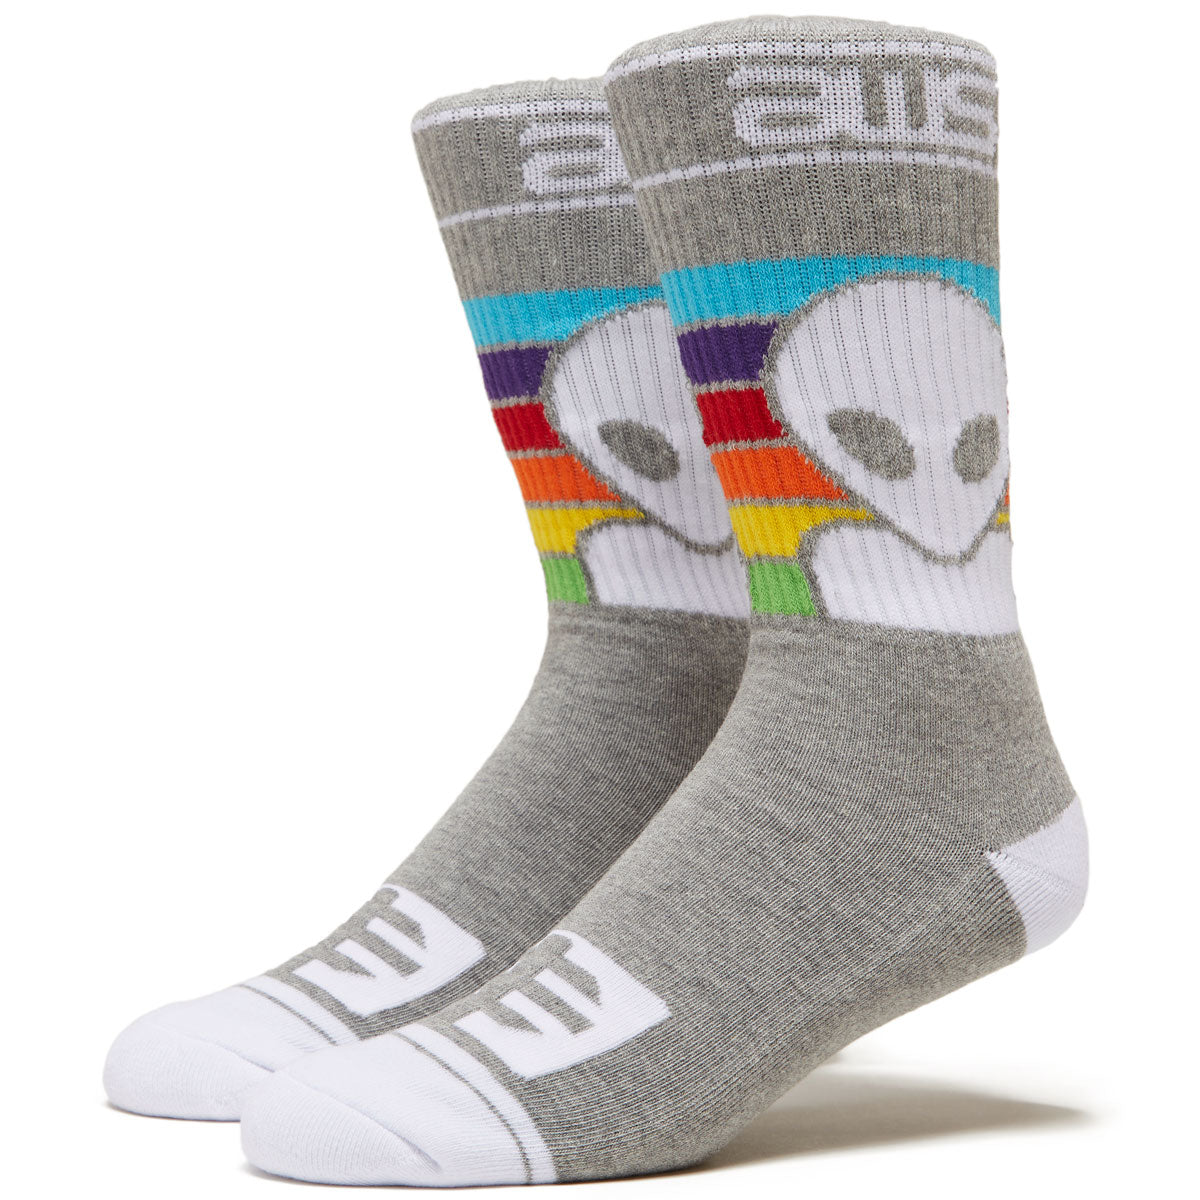 Alien Workshop Spectrum Socks image 1